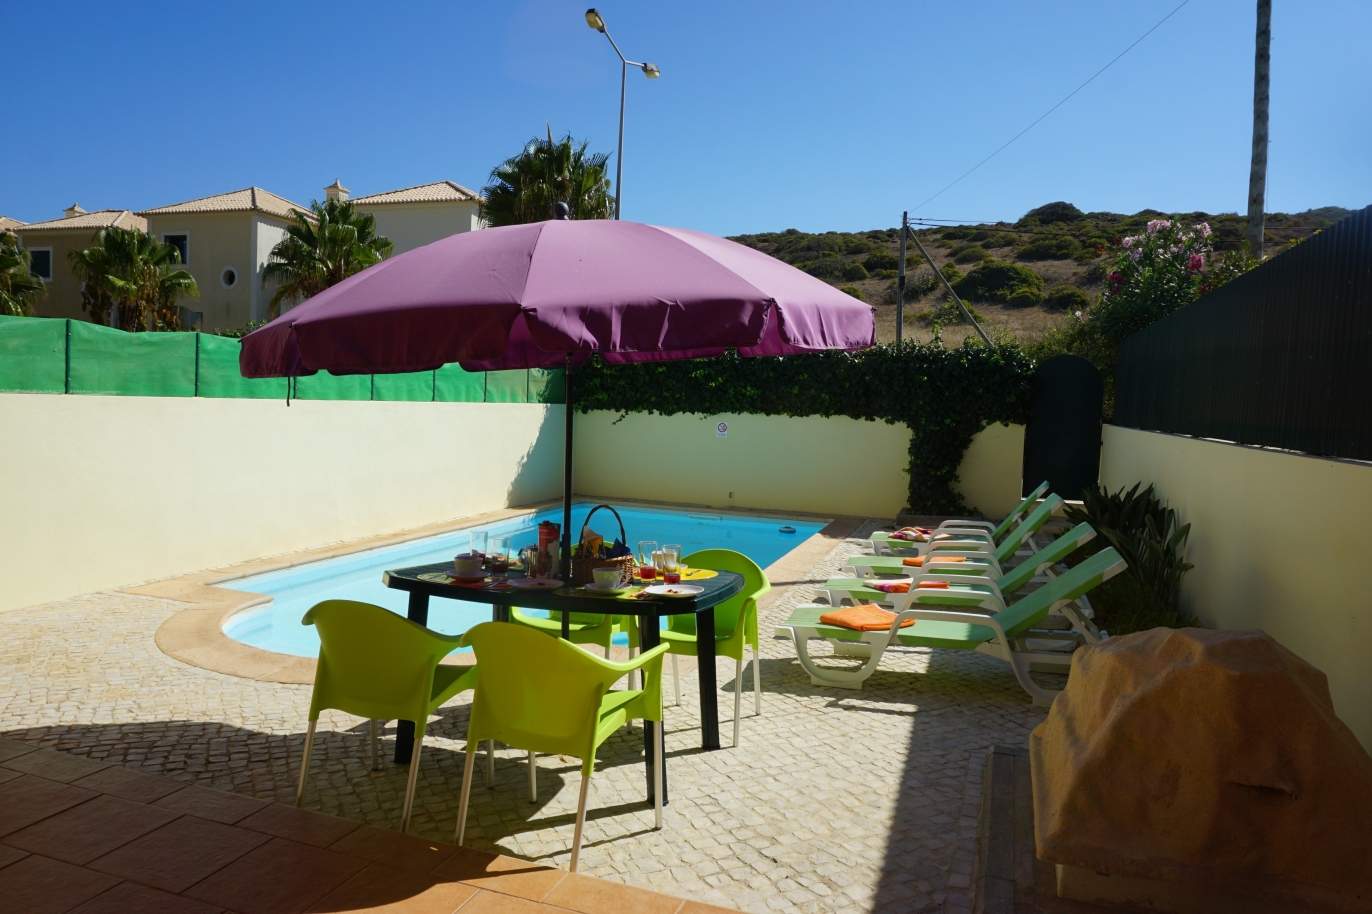 Venda de moradia com piscina em Budens, Vila do Bispo, Algarve_117779